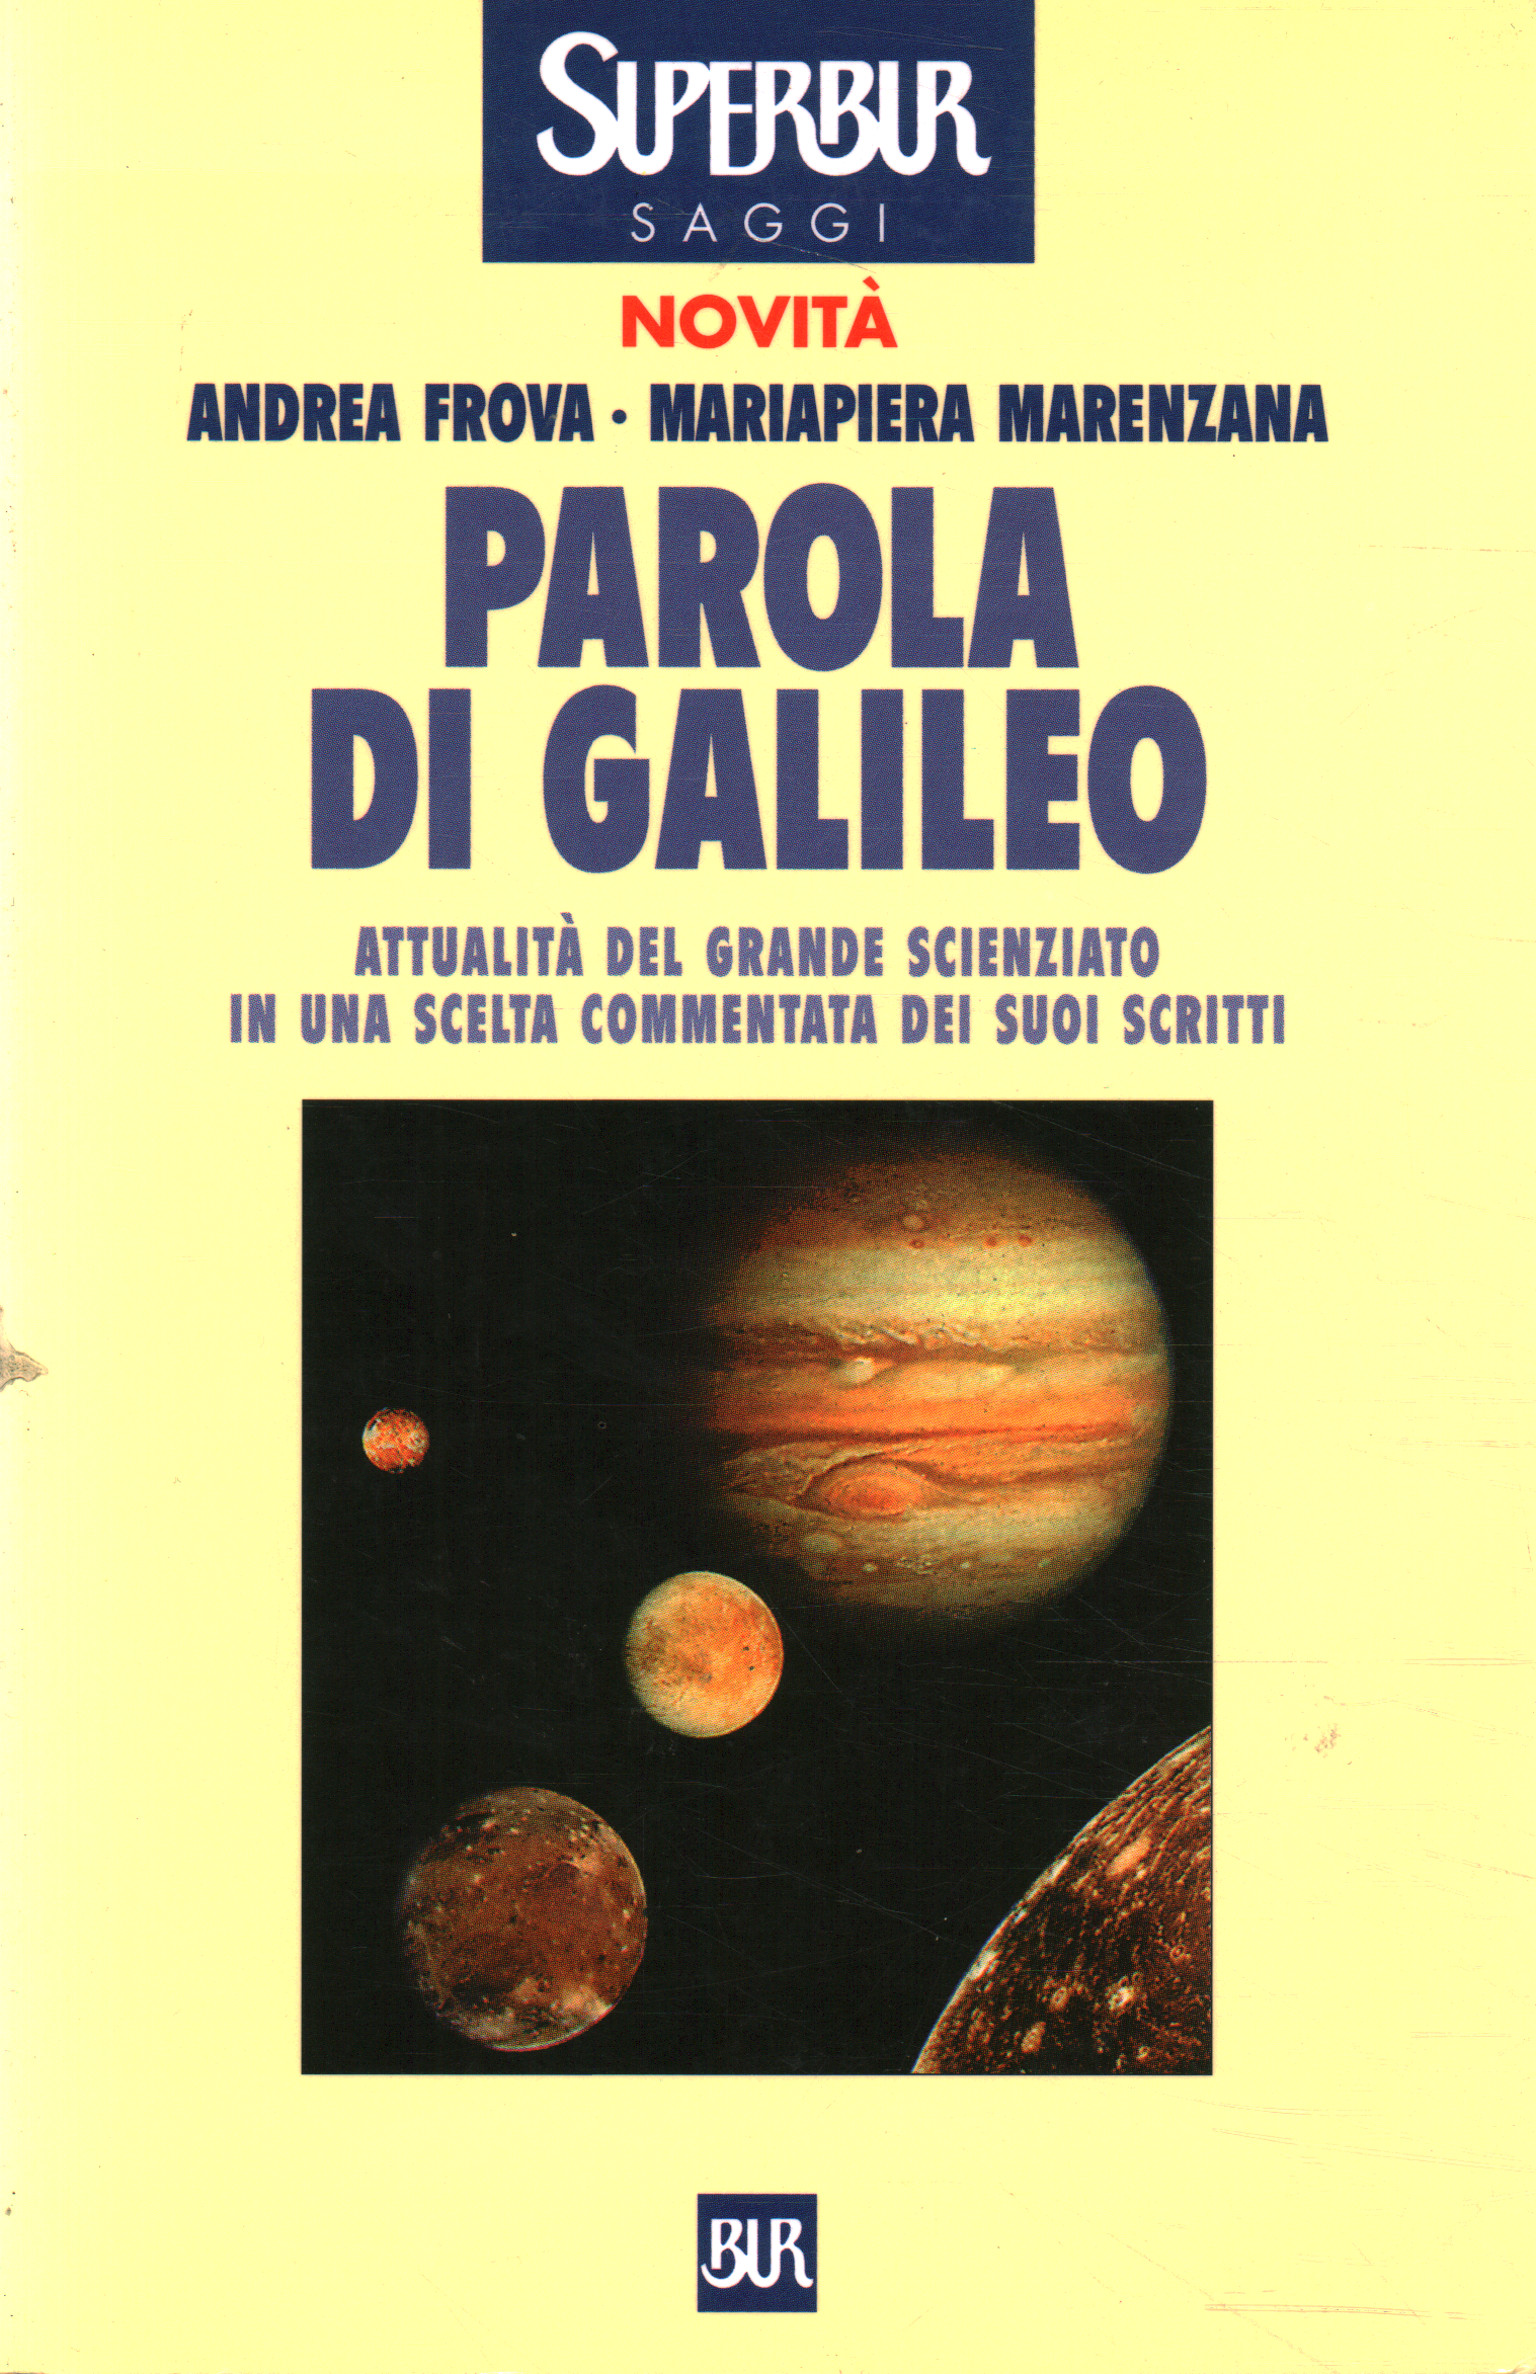 Word of Galileo